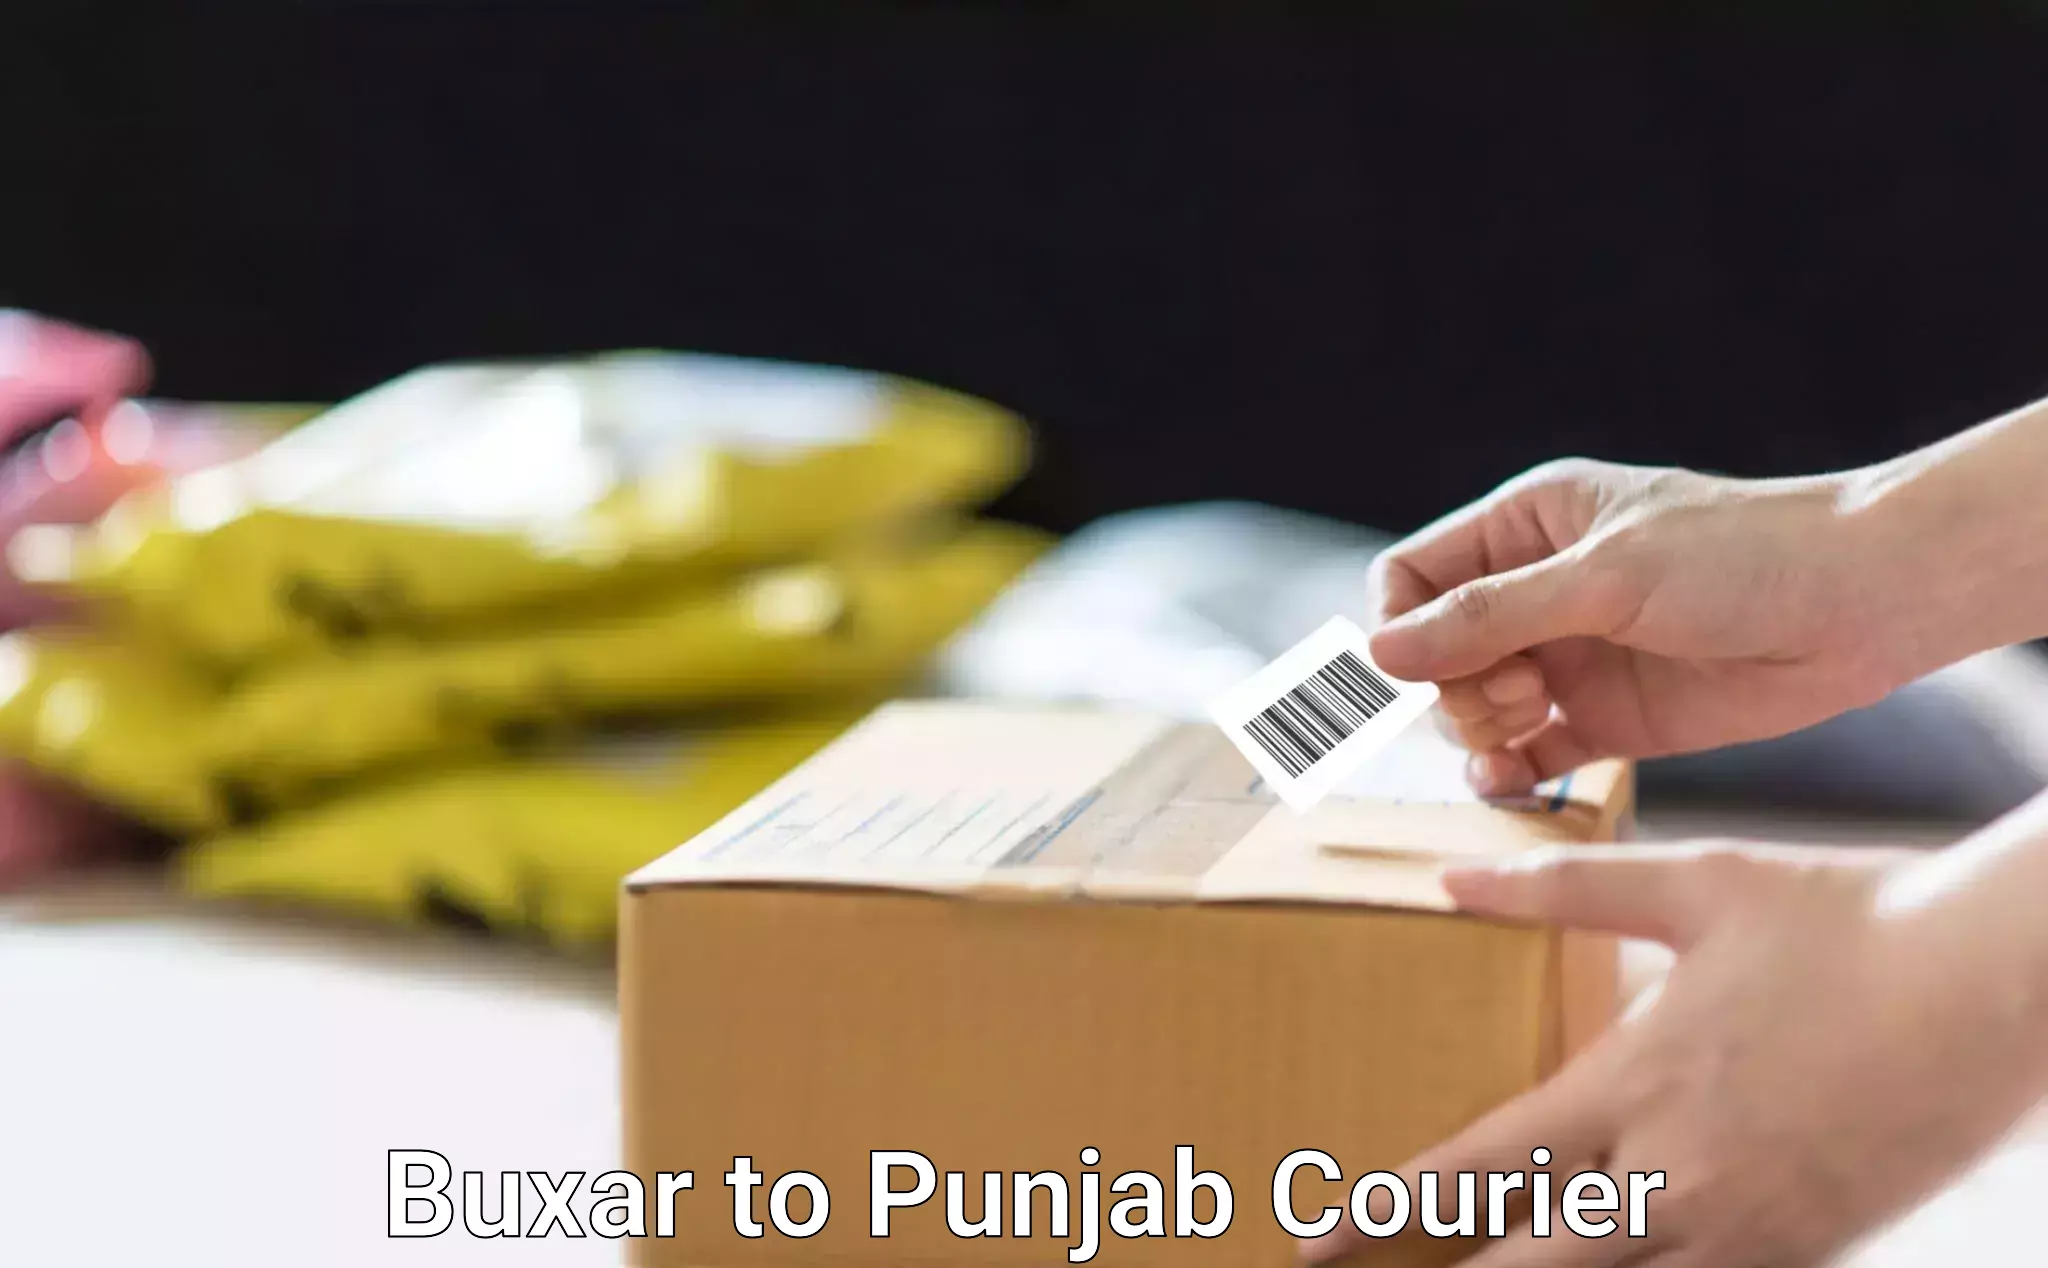 Professional moving company Buxar to Mandi Gobindgarh